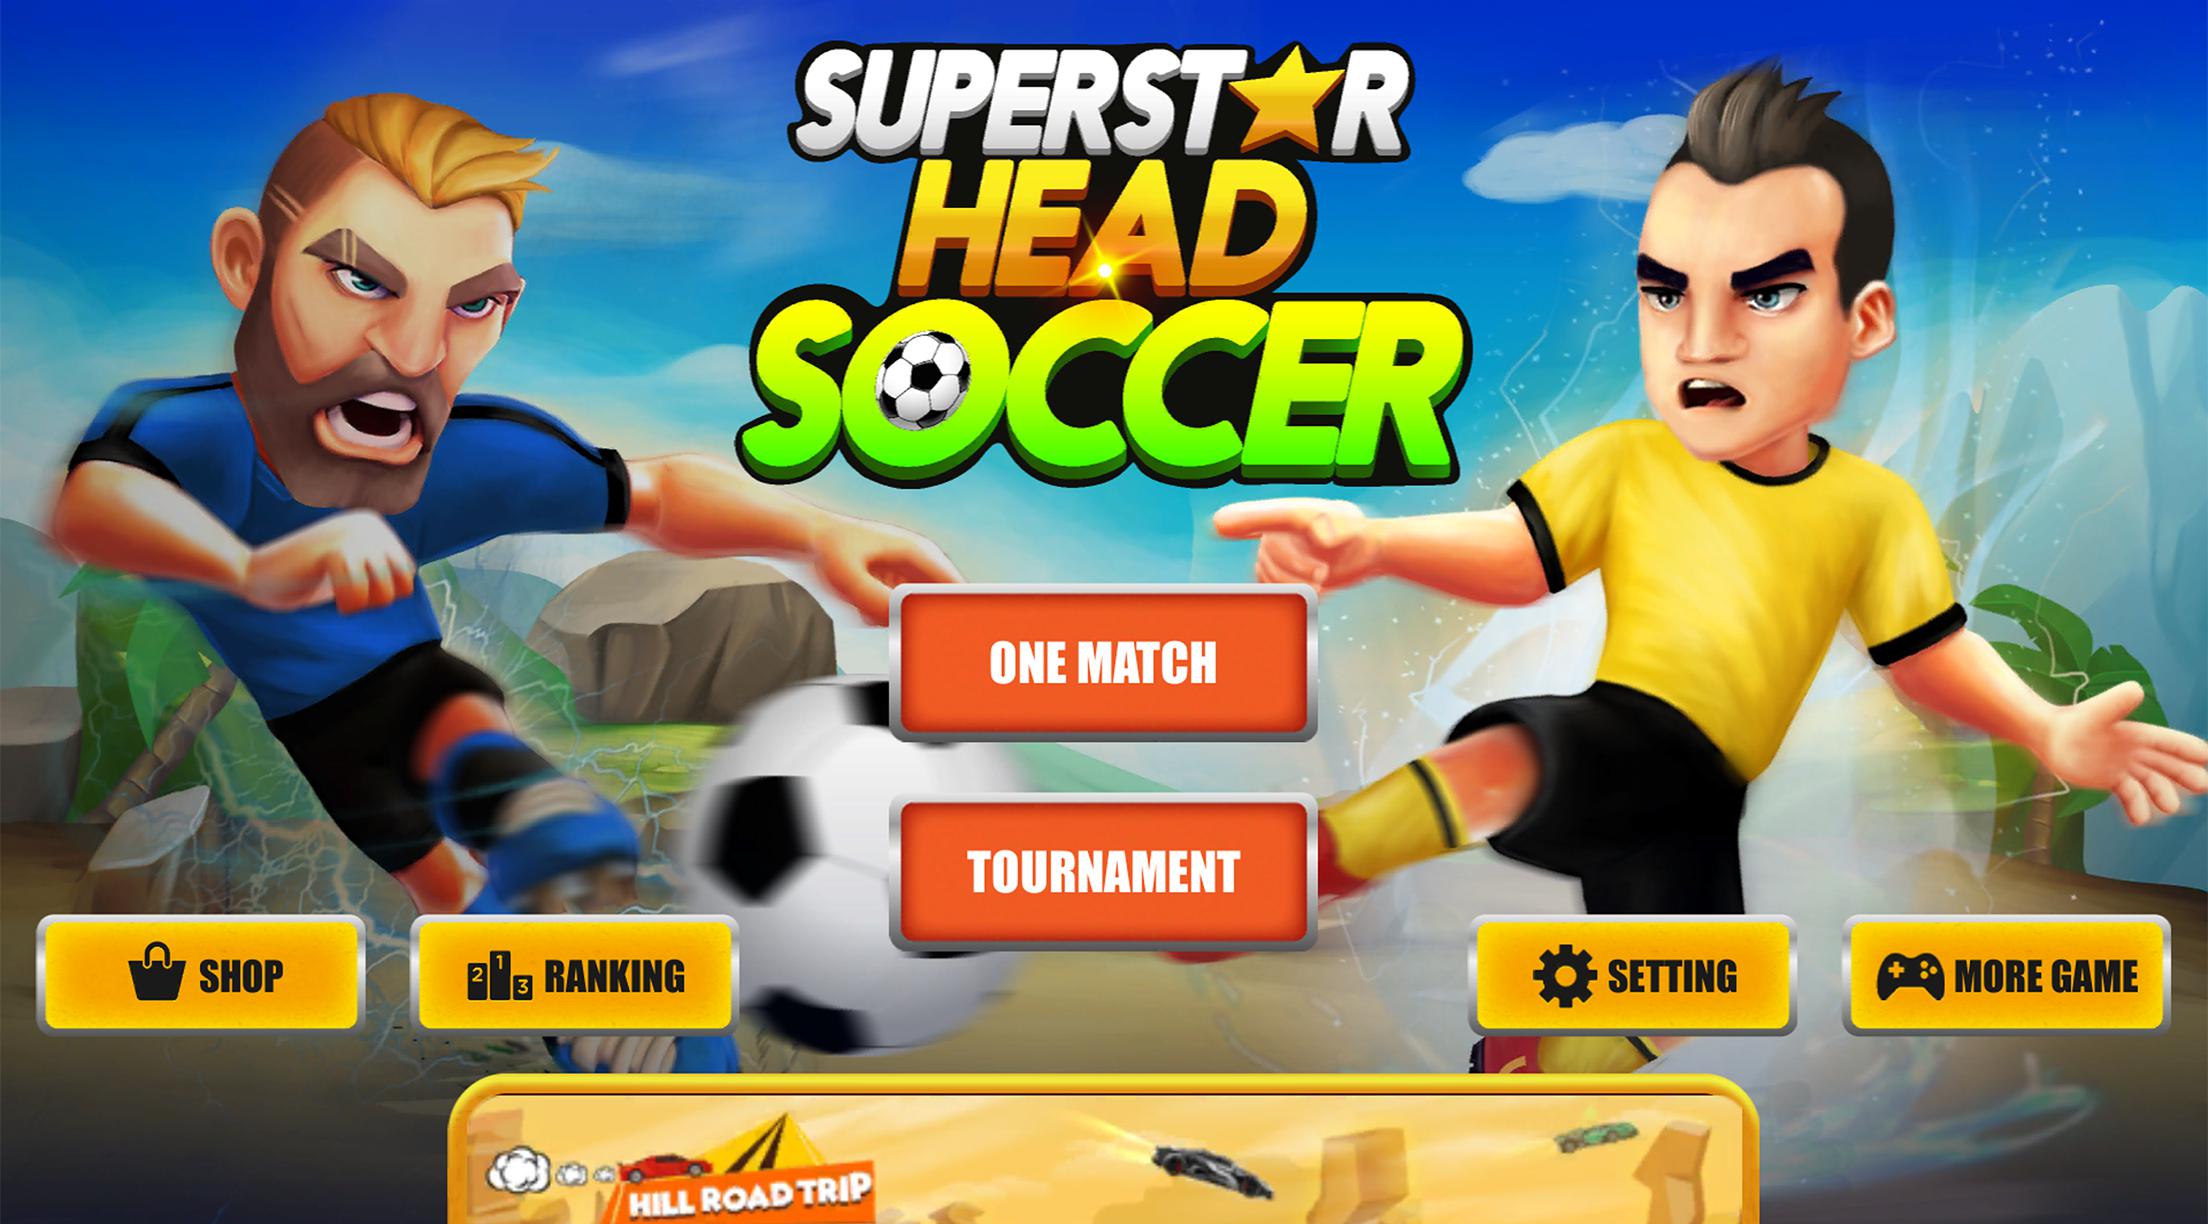 Super Star Head Soccer